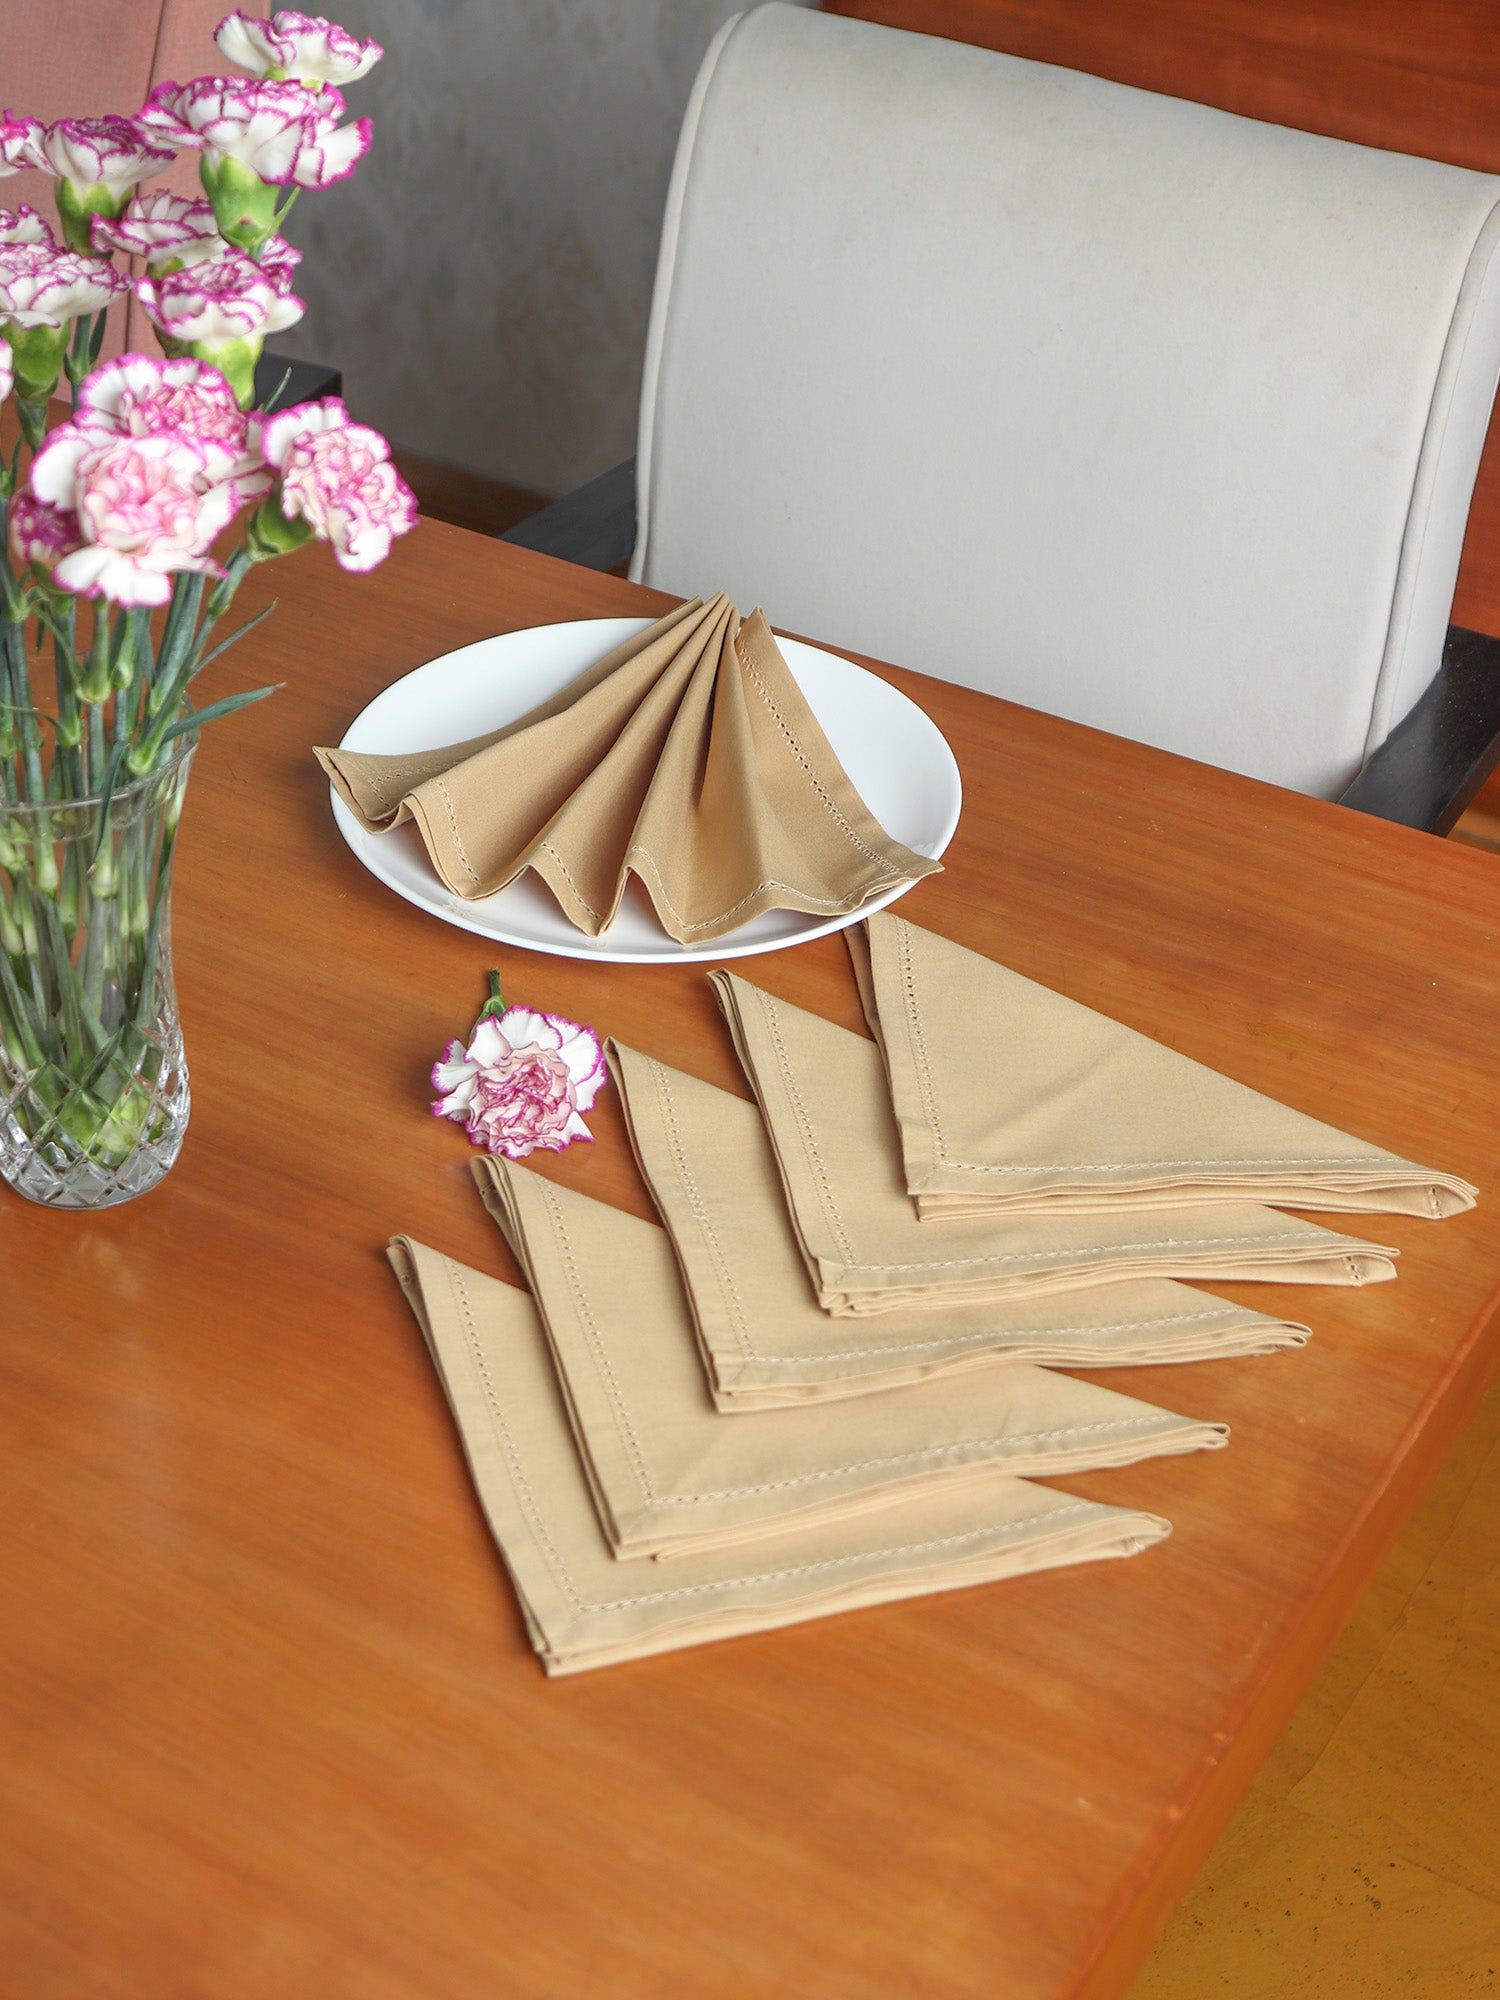 fagotting embroidered set of 6 dinner napkins in beige color - 16x16 inch